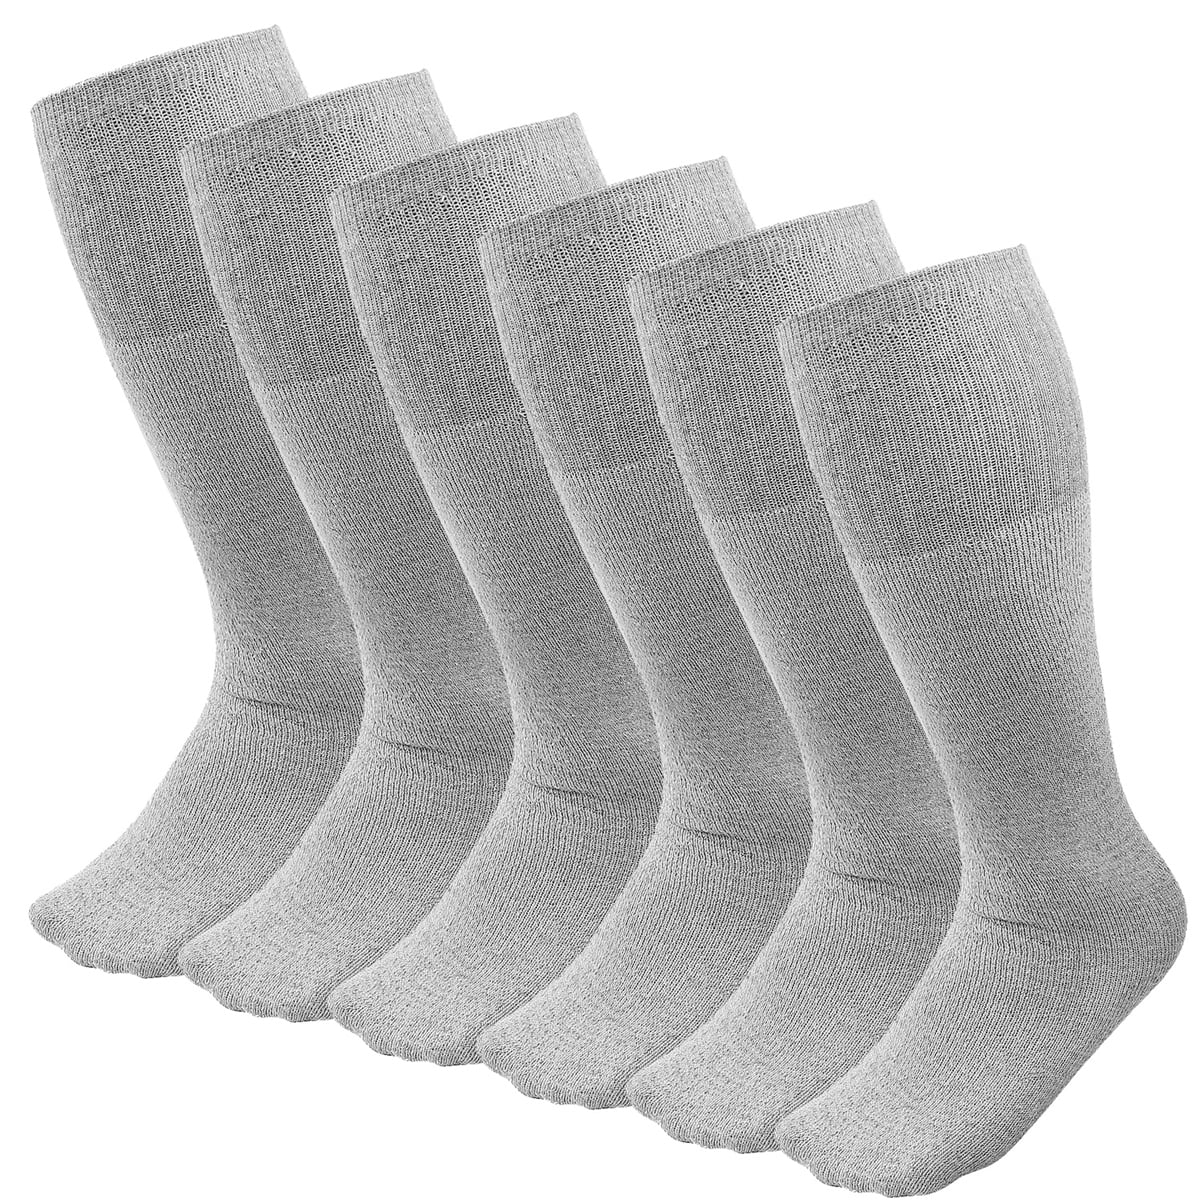 6 Pairs Men's Athletic Tube Socks Over the Calf - 25